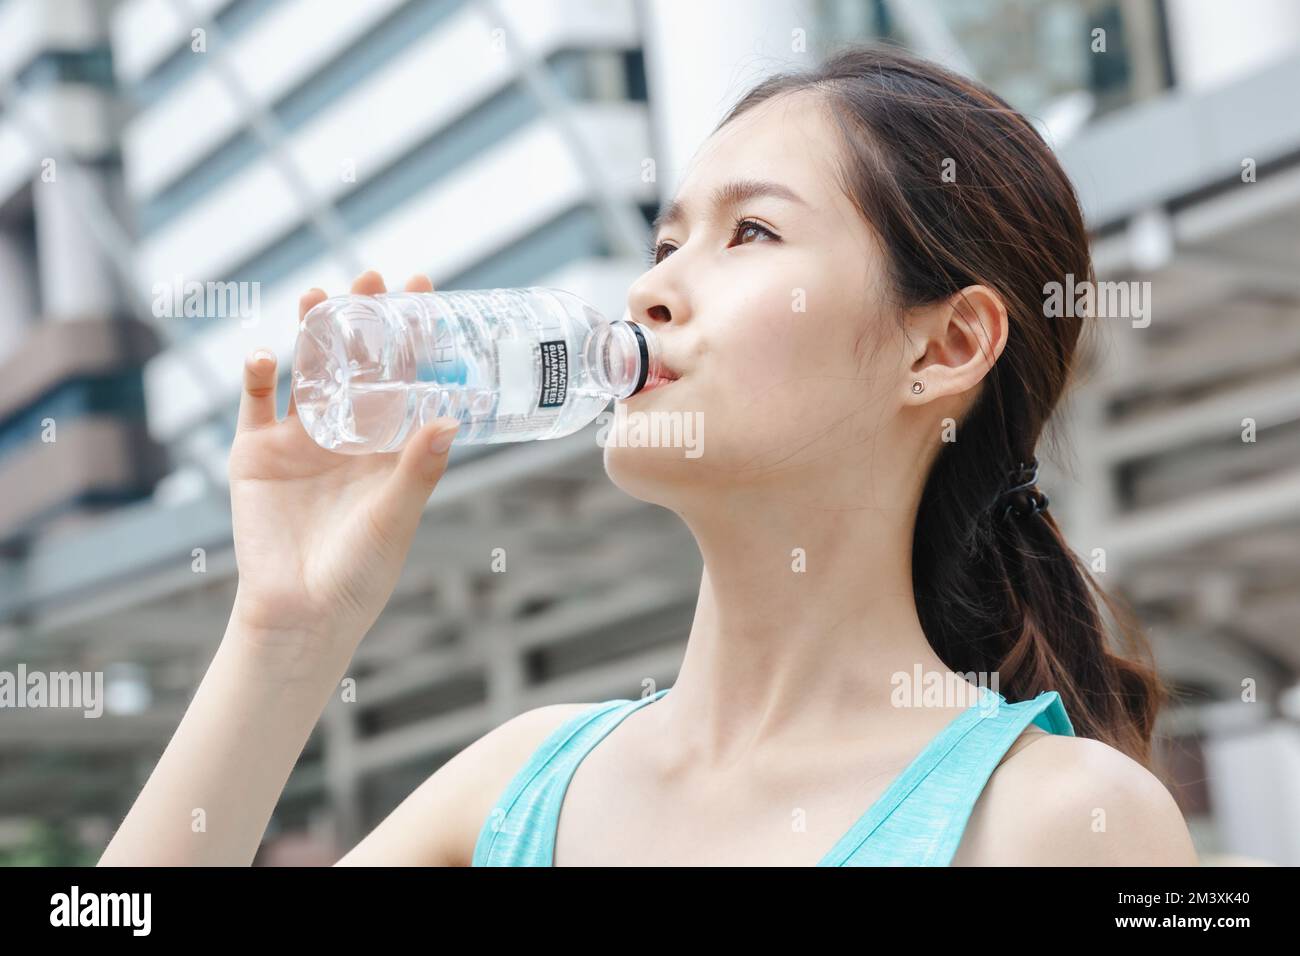 Teenage girl drinks water from bottle Stock Photo by ©BestPhotoStudio  64410247